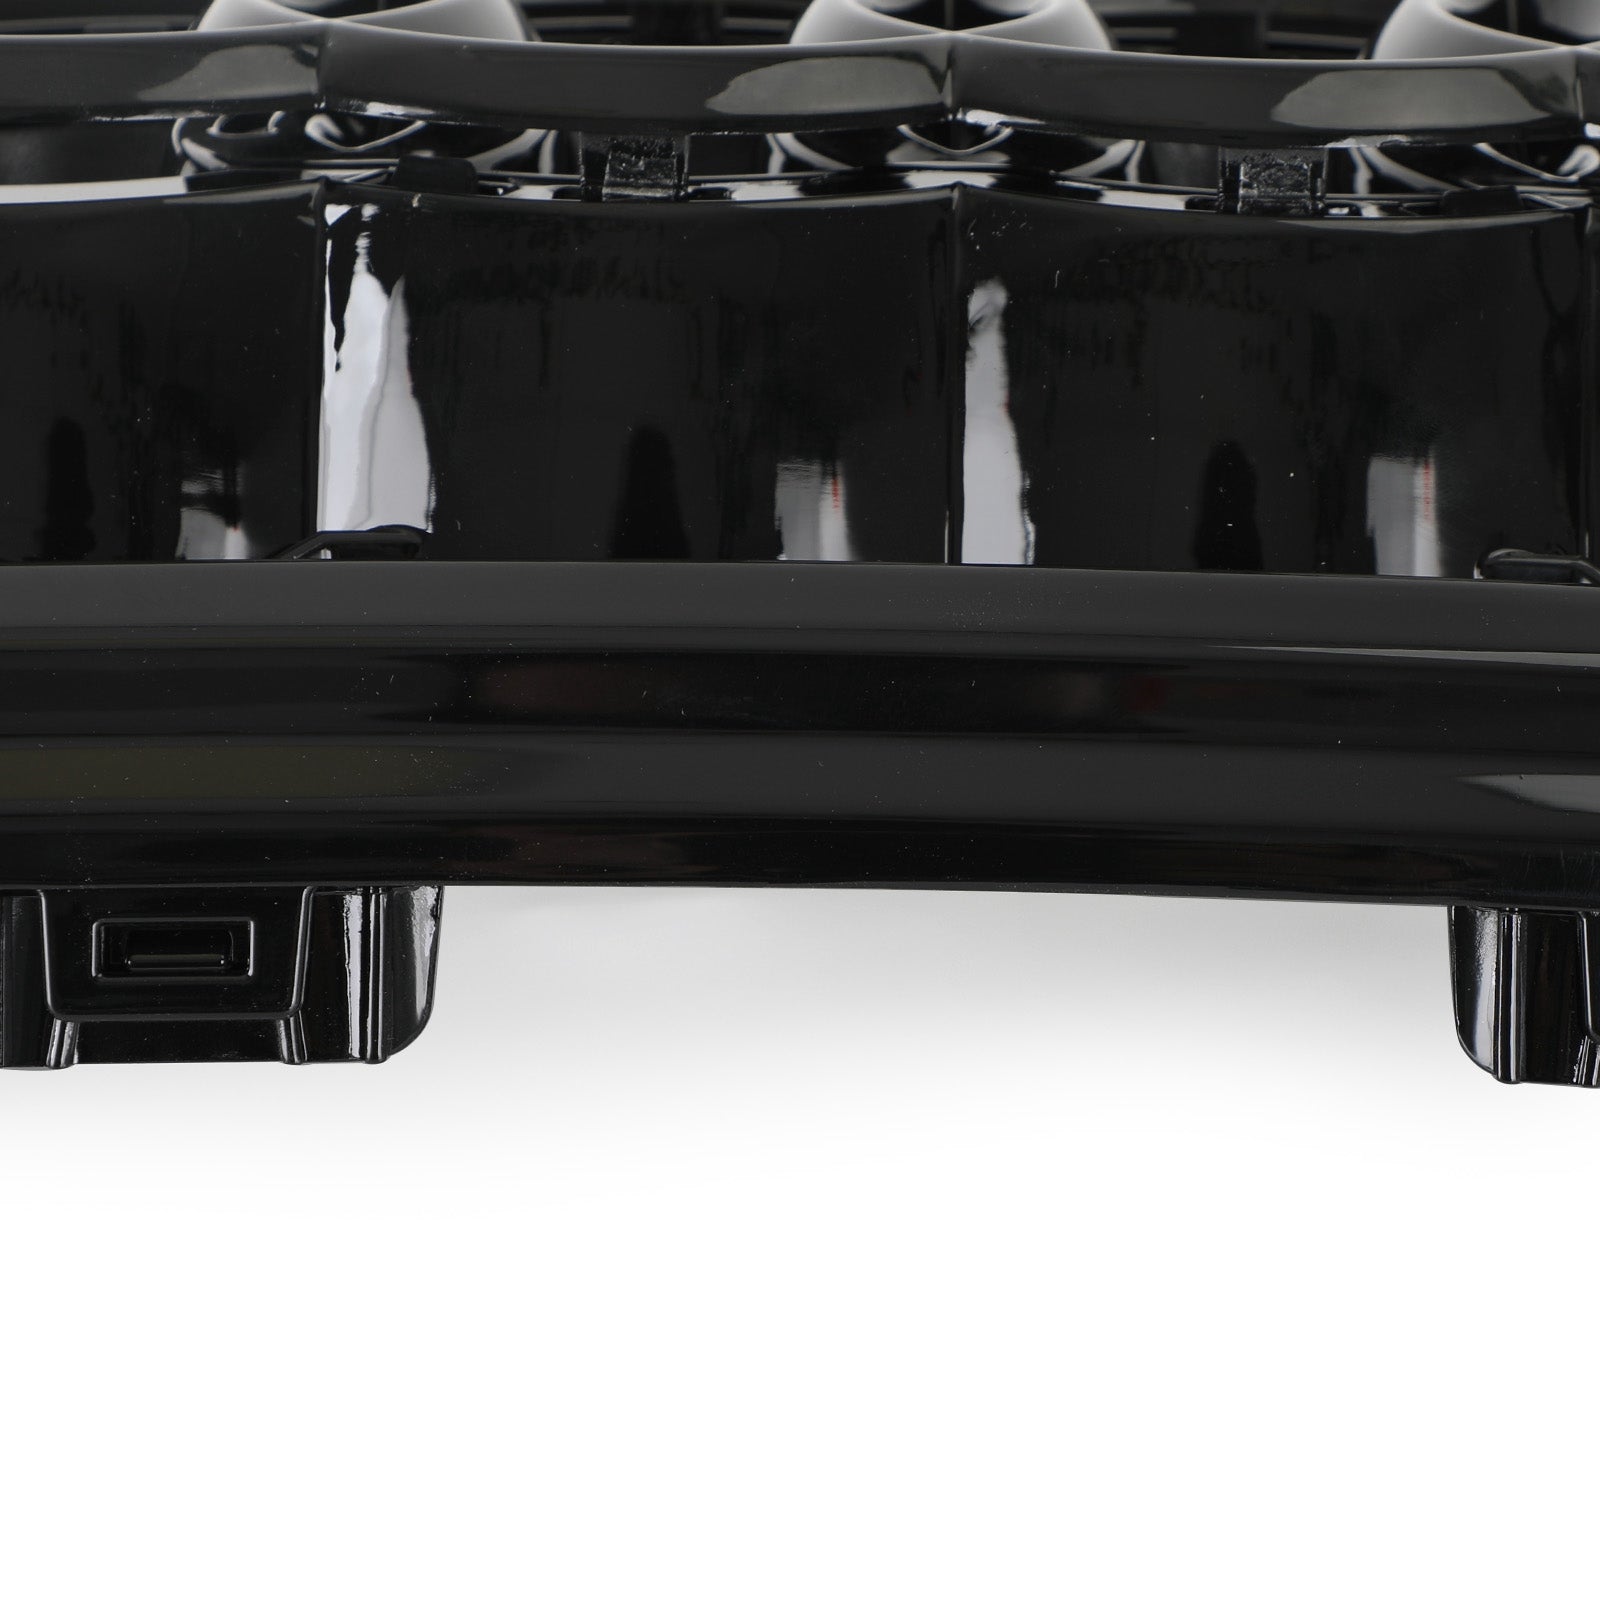 Parrilla hexagonal de malla deportiva tipo panal estilo RS7, compatible con Audi A7/S7 2012-2015, color negro